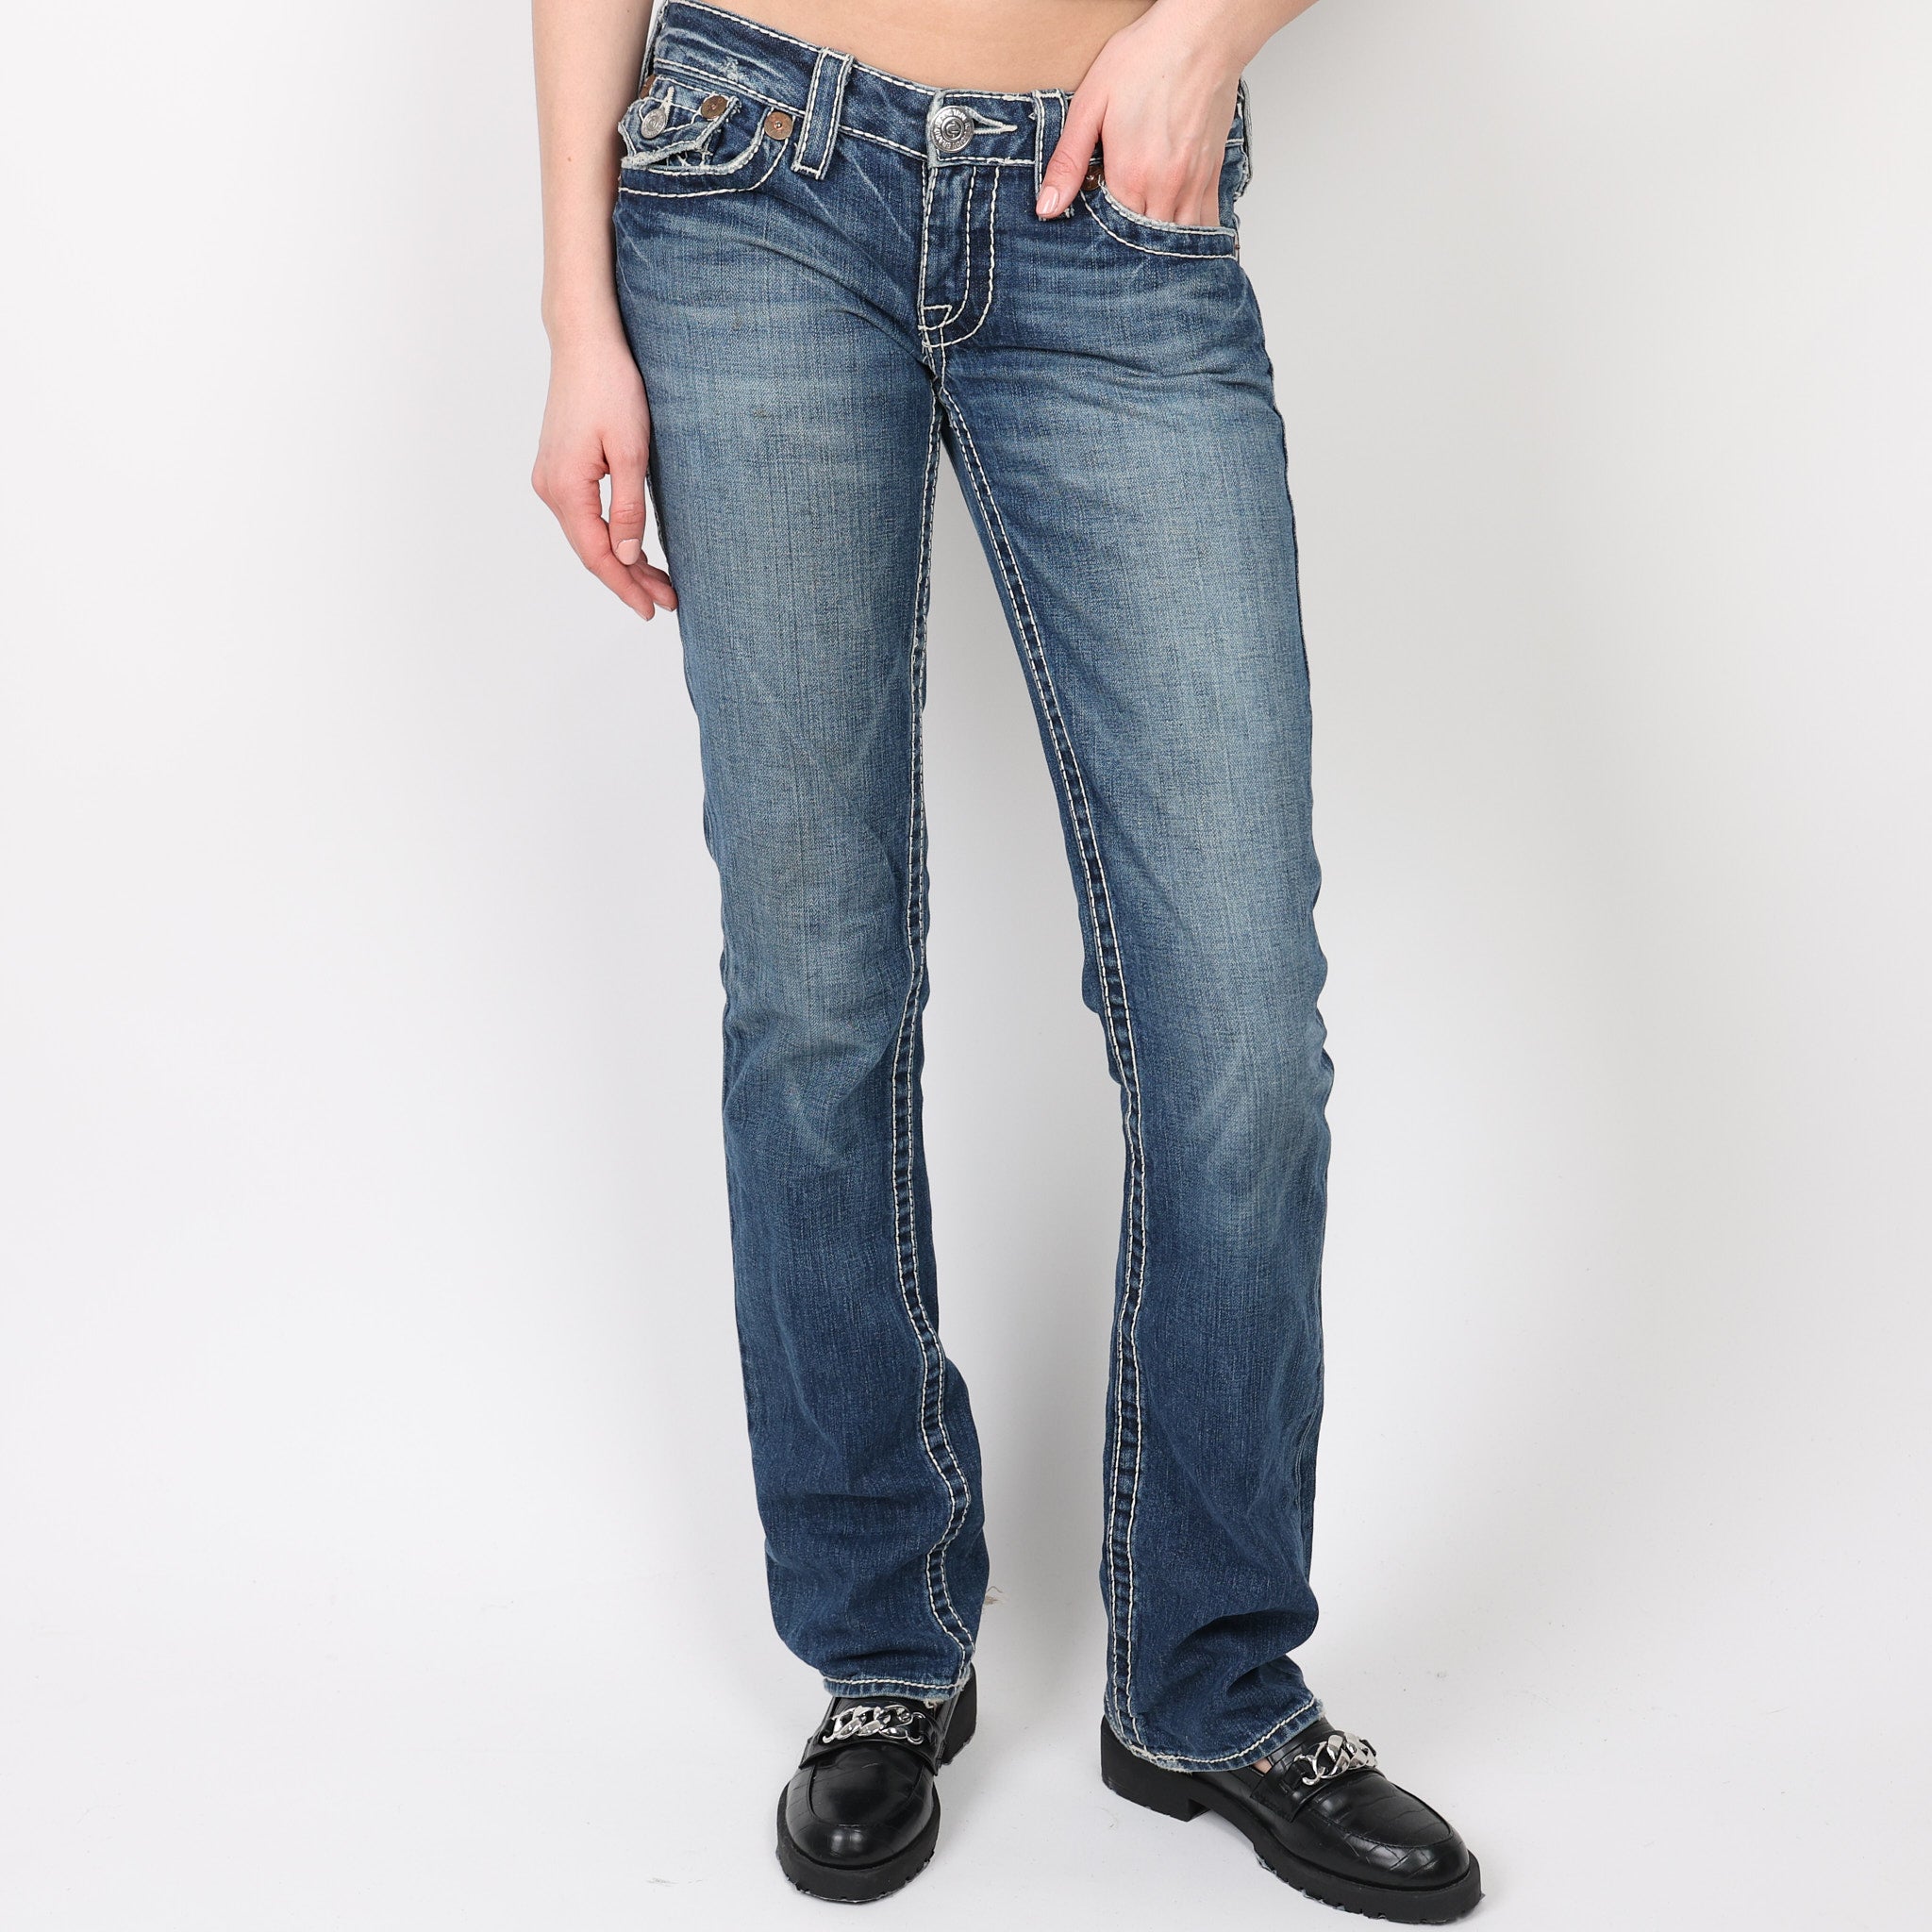 Jeans, UK Size 8Waist 27